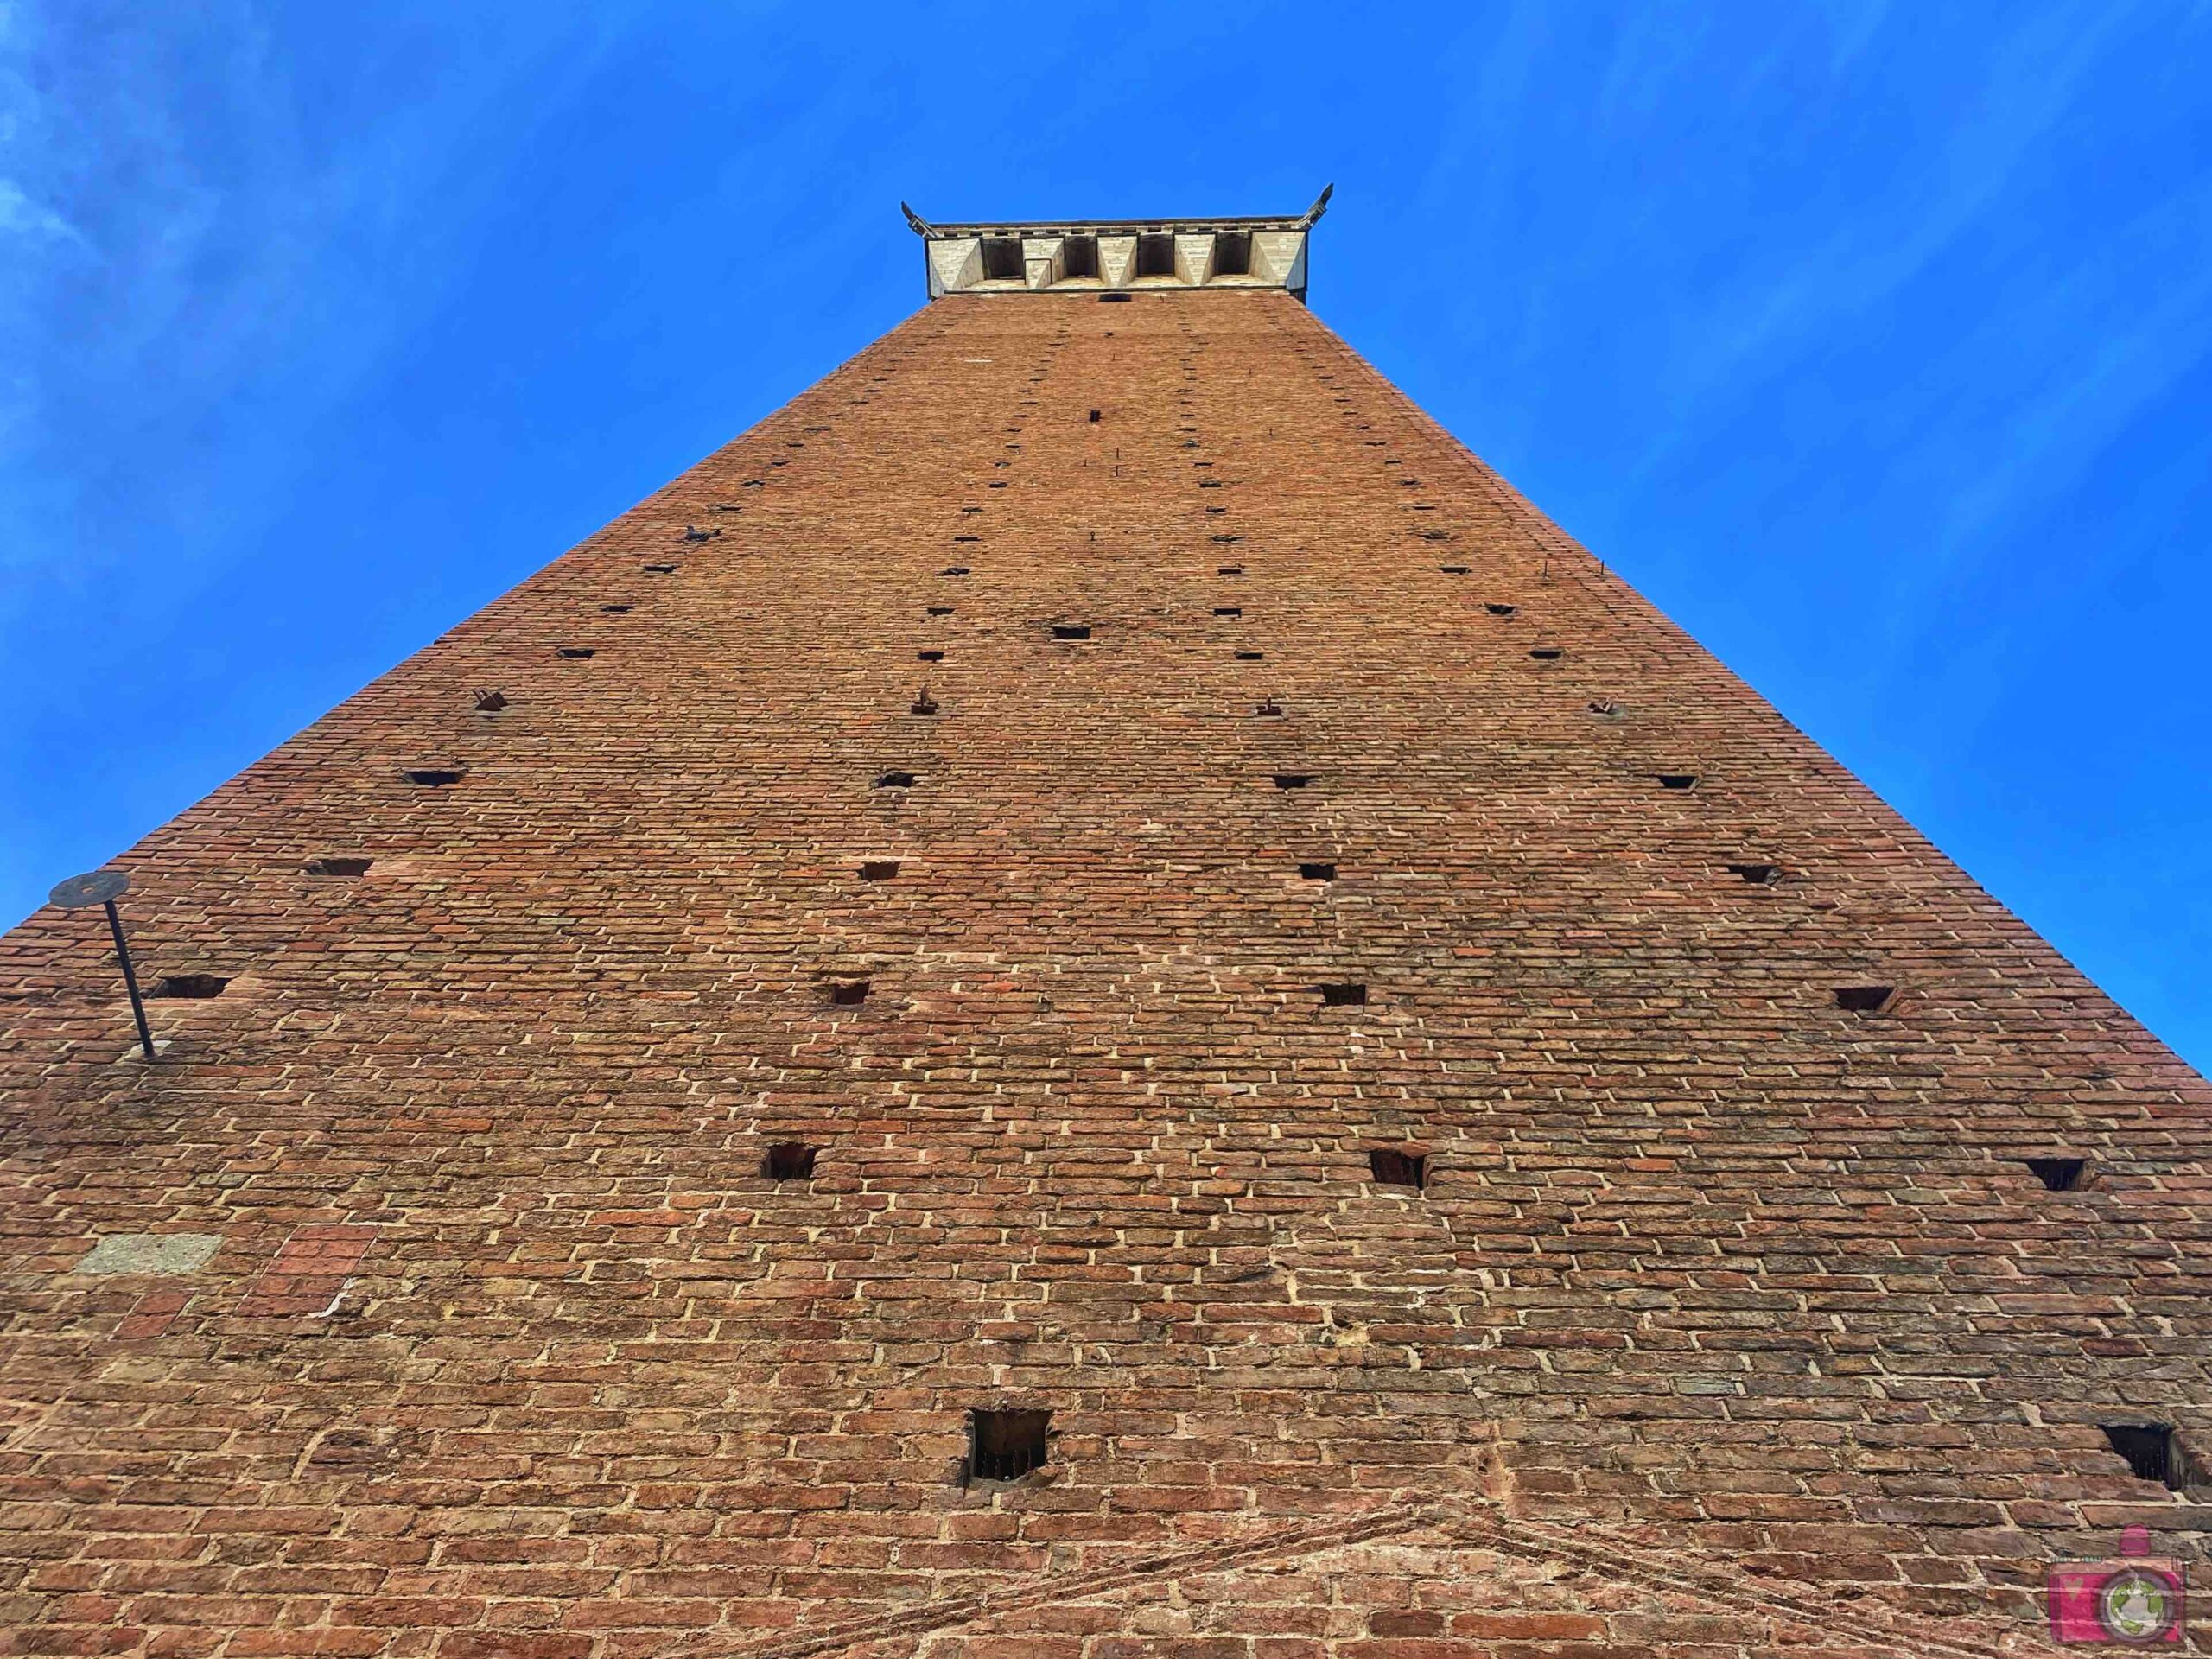 Torre del Mangia Siena